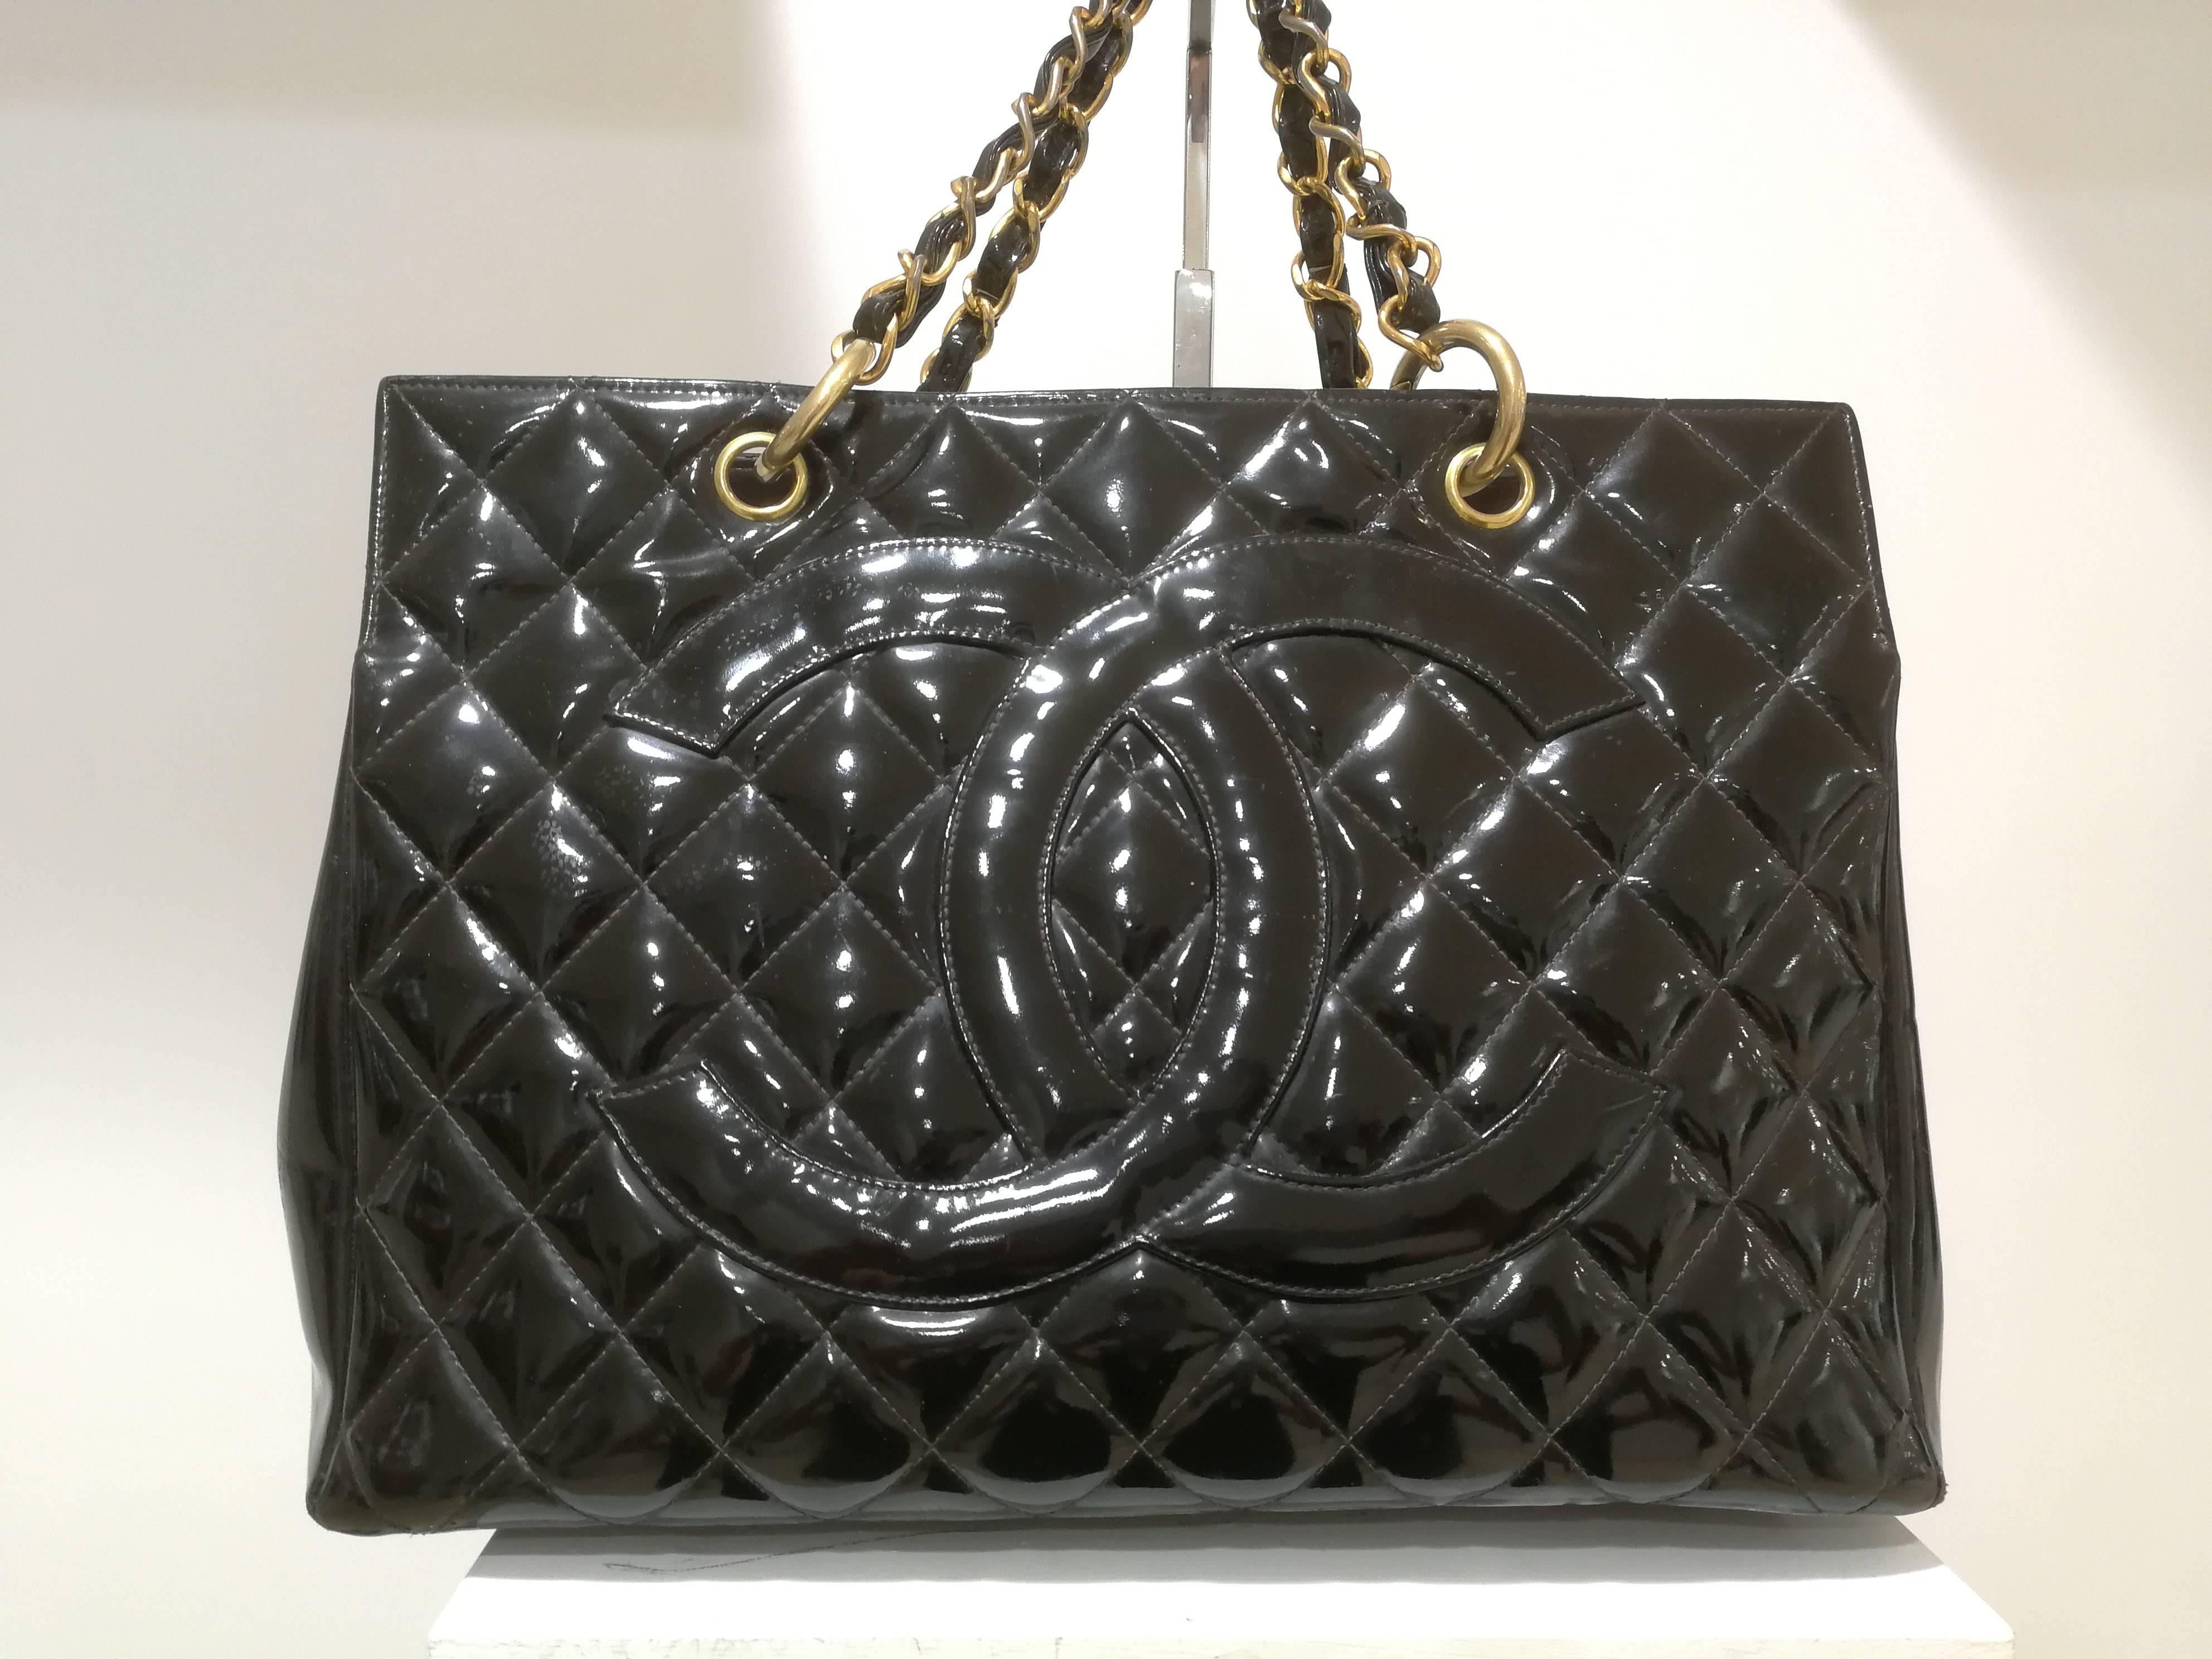 Black Chanel black patent leather gold hardware bag